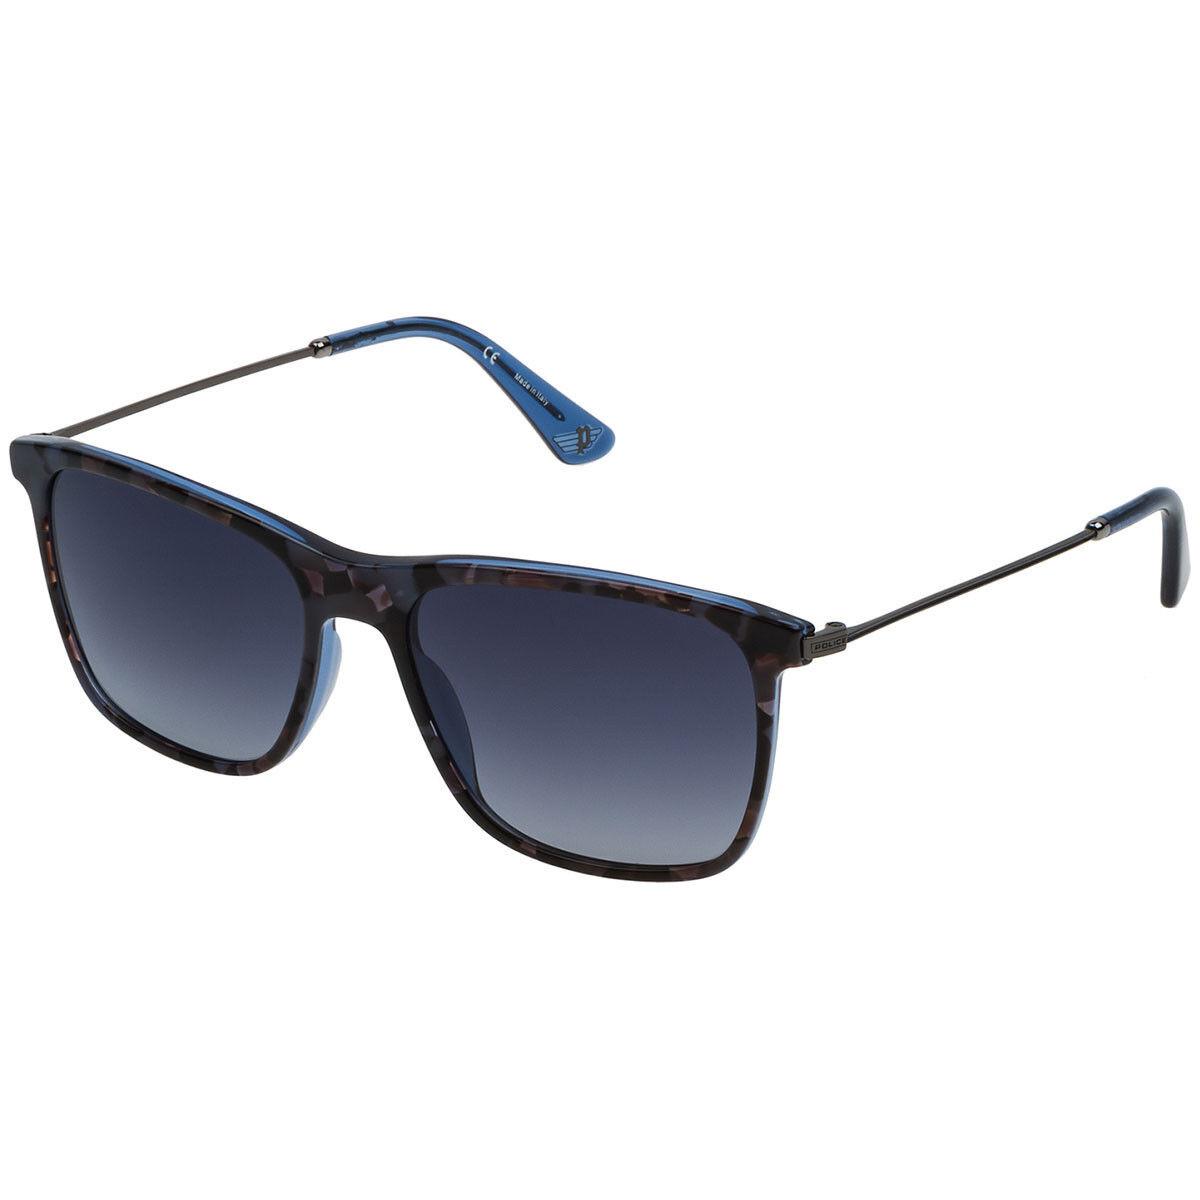 Police Sunglasses Spl 572N 09D4 Blue Tortoise / Gradient Blue 56 mm